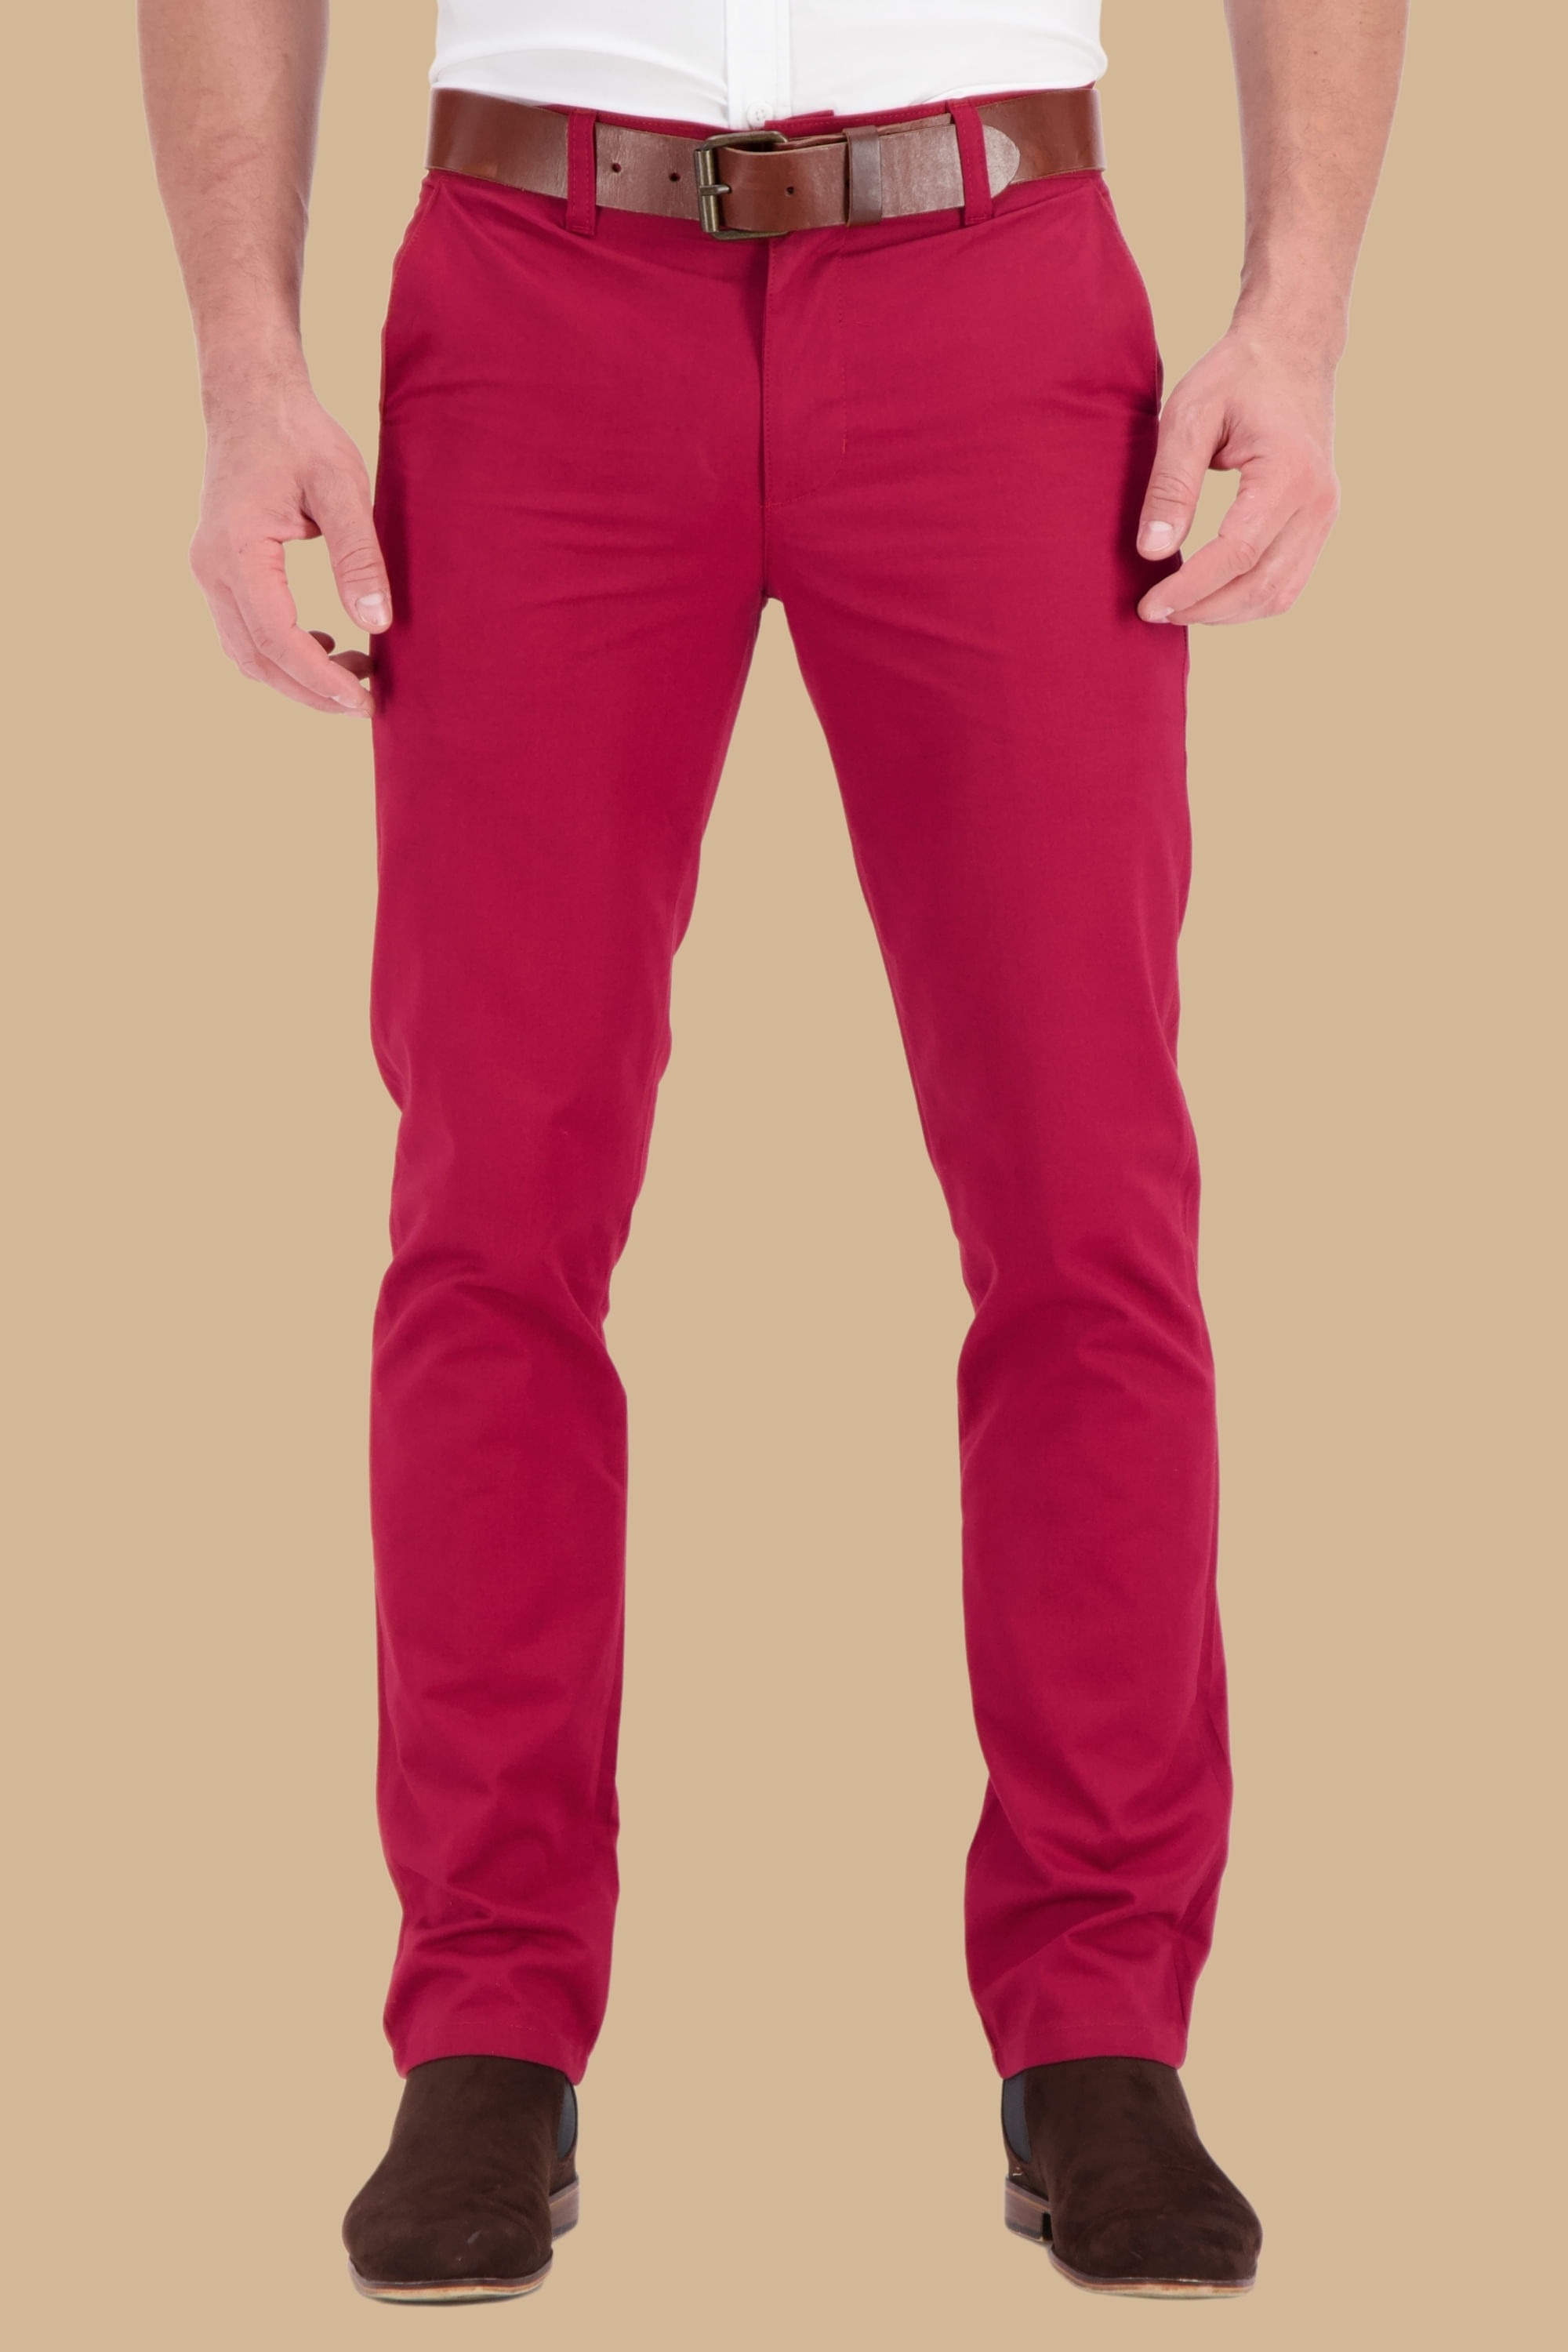 Compra Pantalon para Hombre Color www.surtitodo.com.co - surtitodoMobile